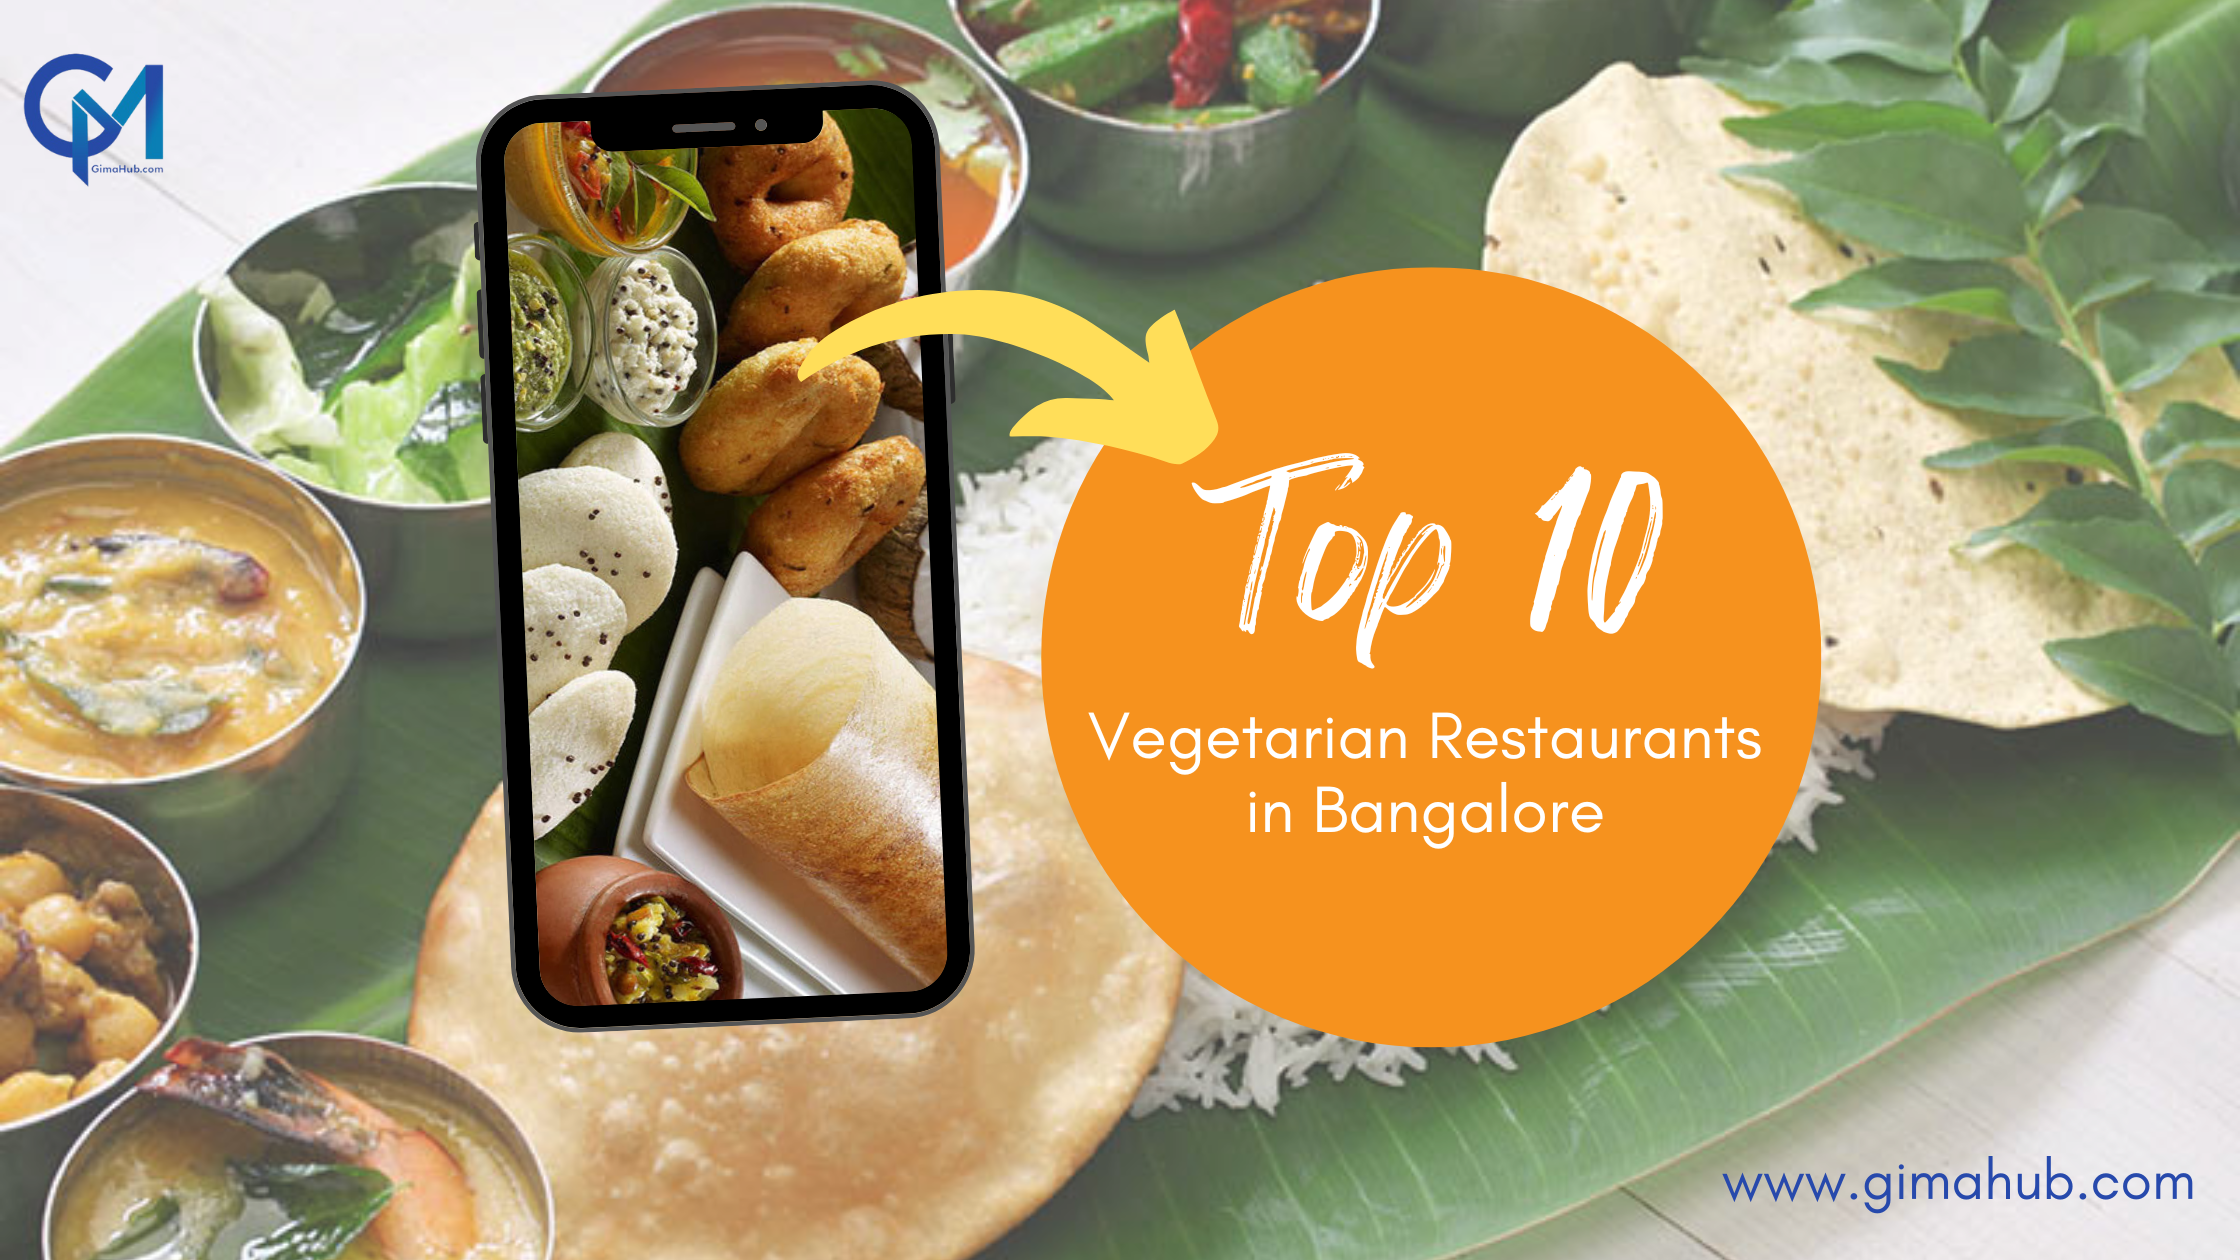 Top 10 Vegetarian Restaurants in Bangalore